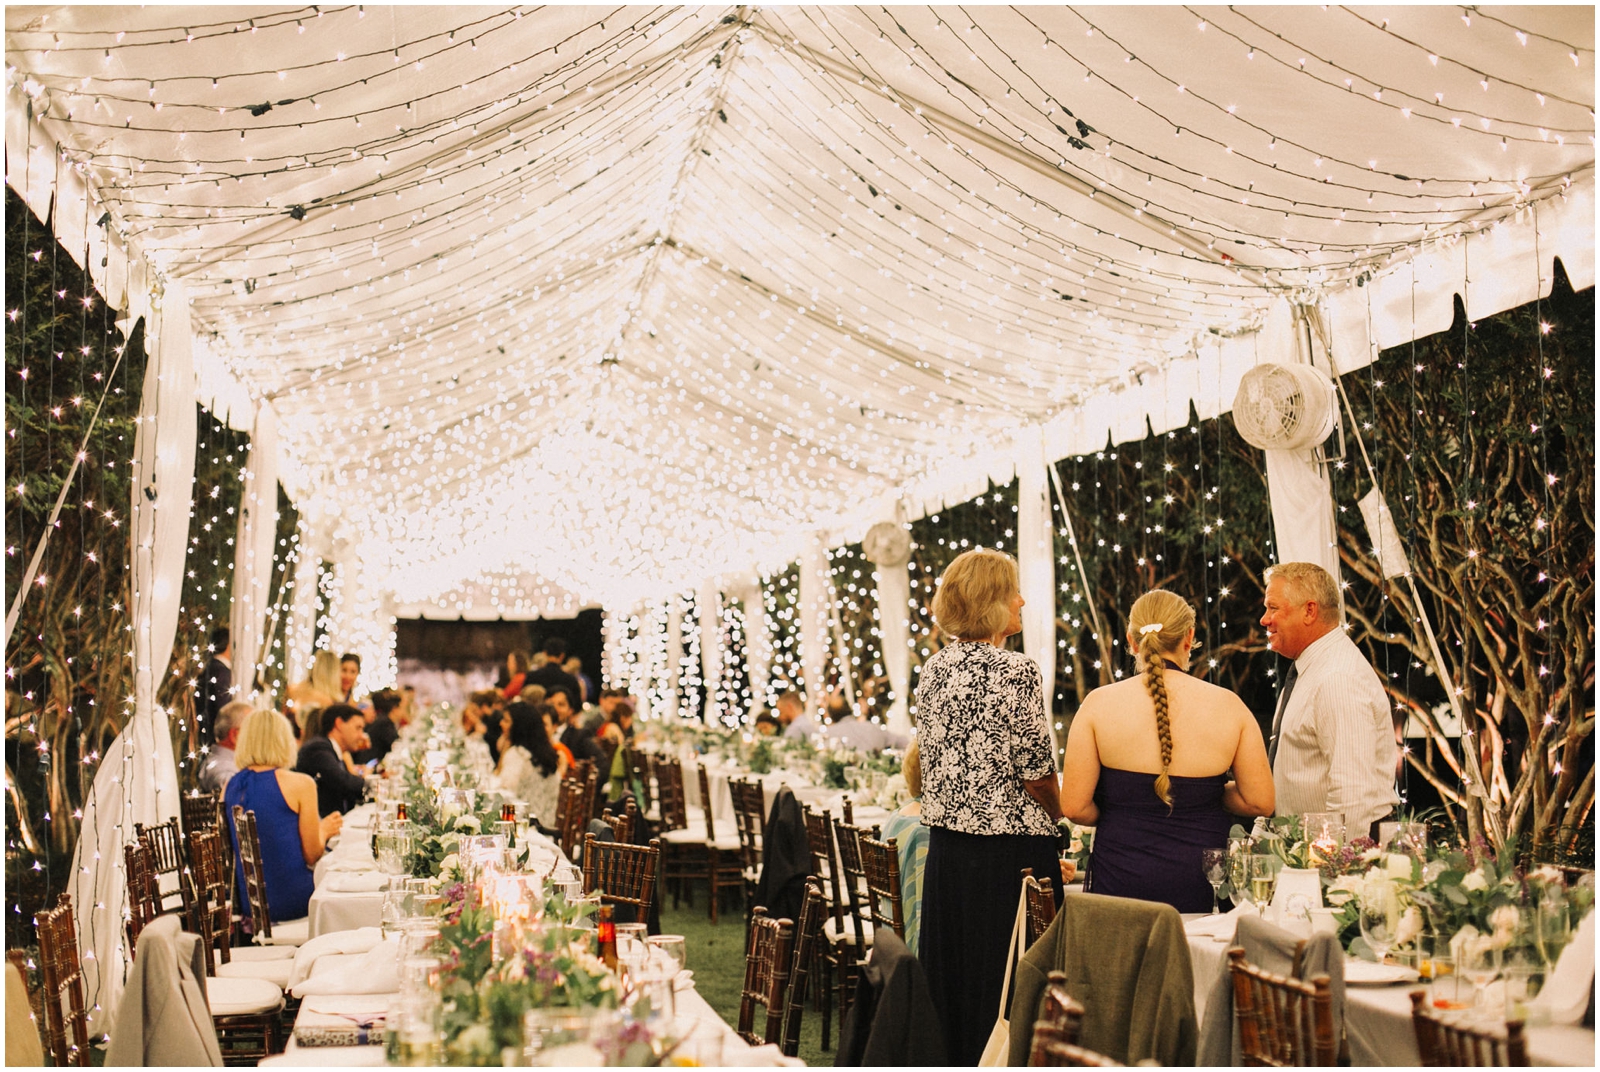  String lights tent for wedding reception 